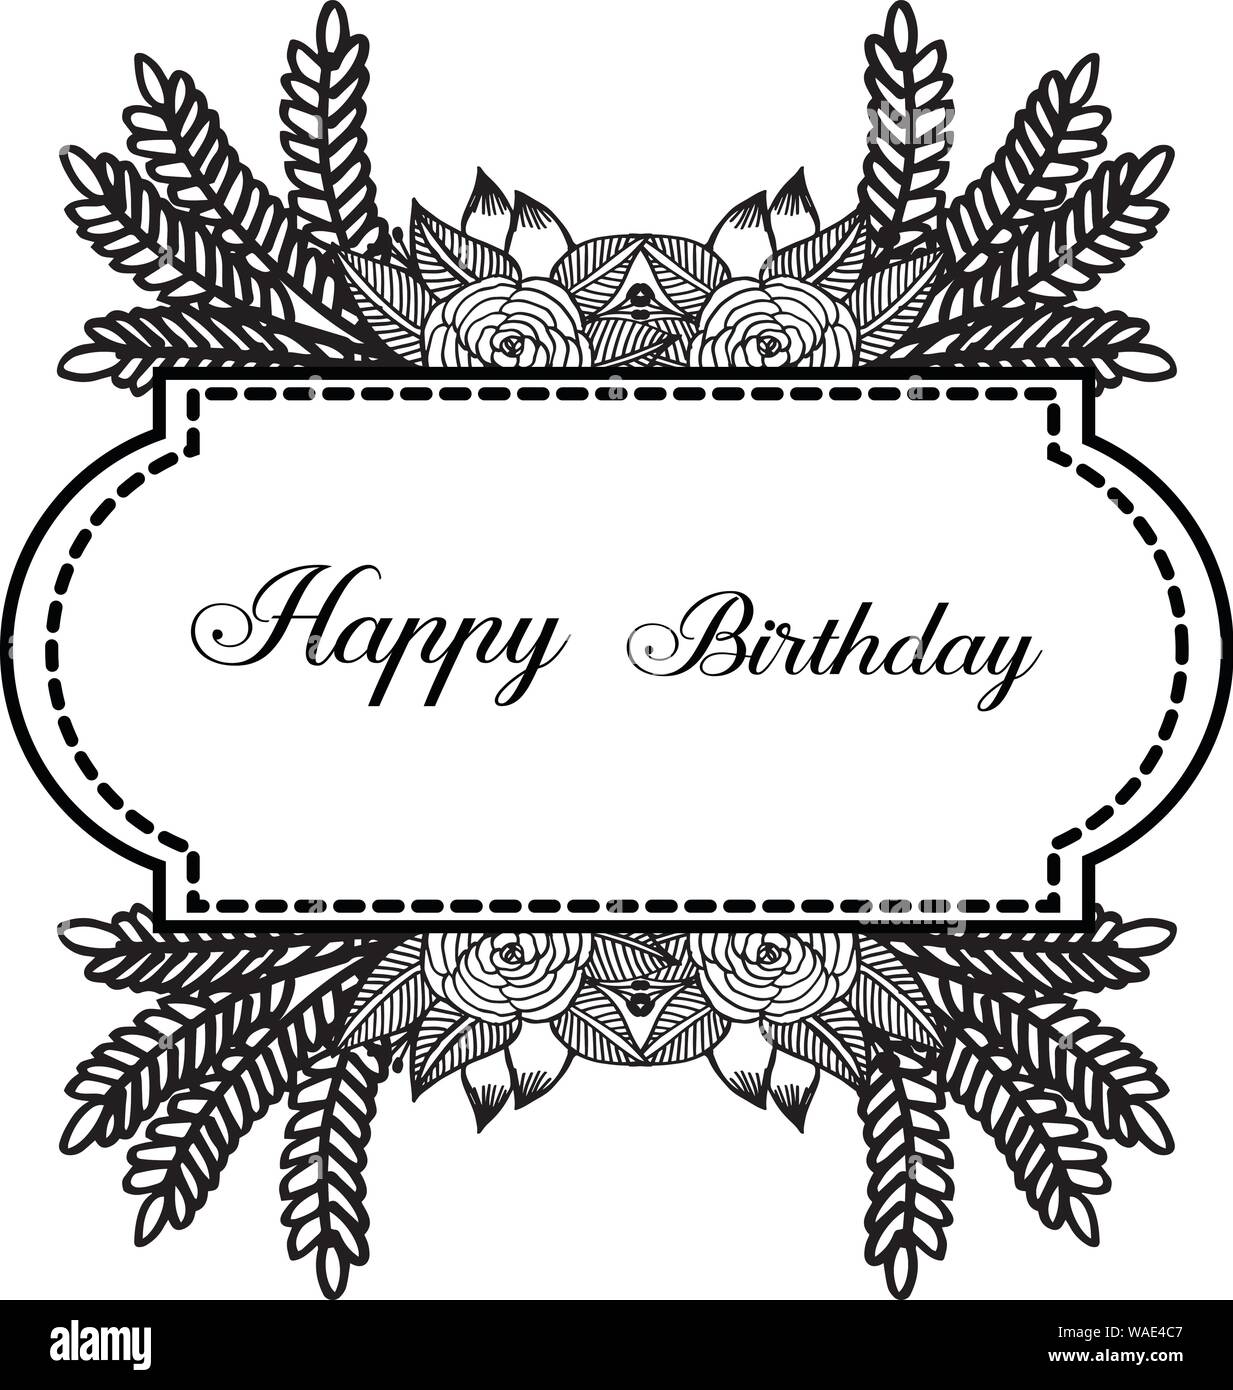 Design Wreath Frame Happy Birthday Background For Invitation Card